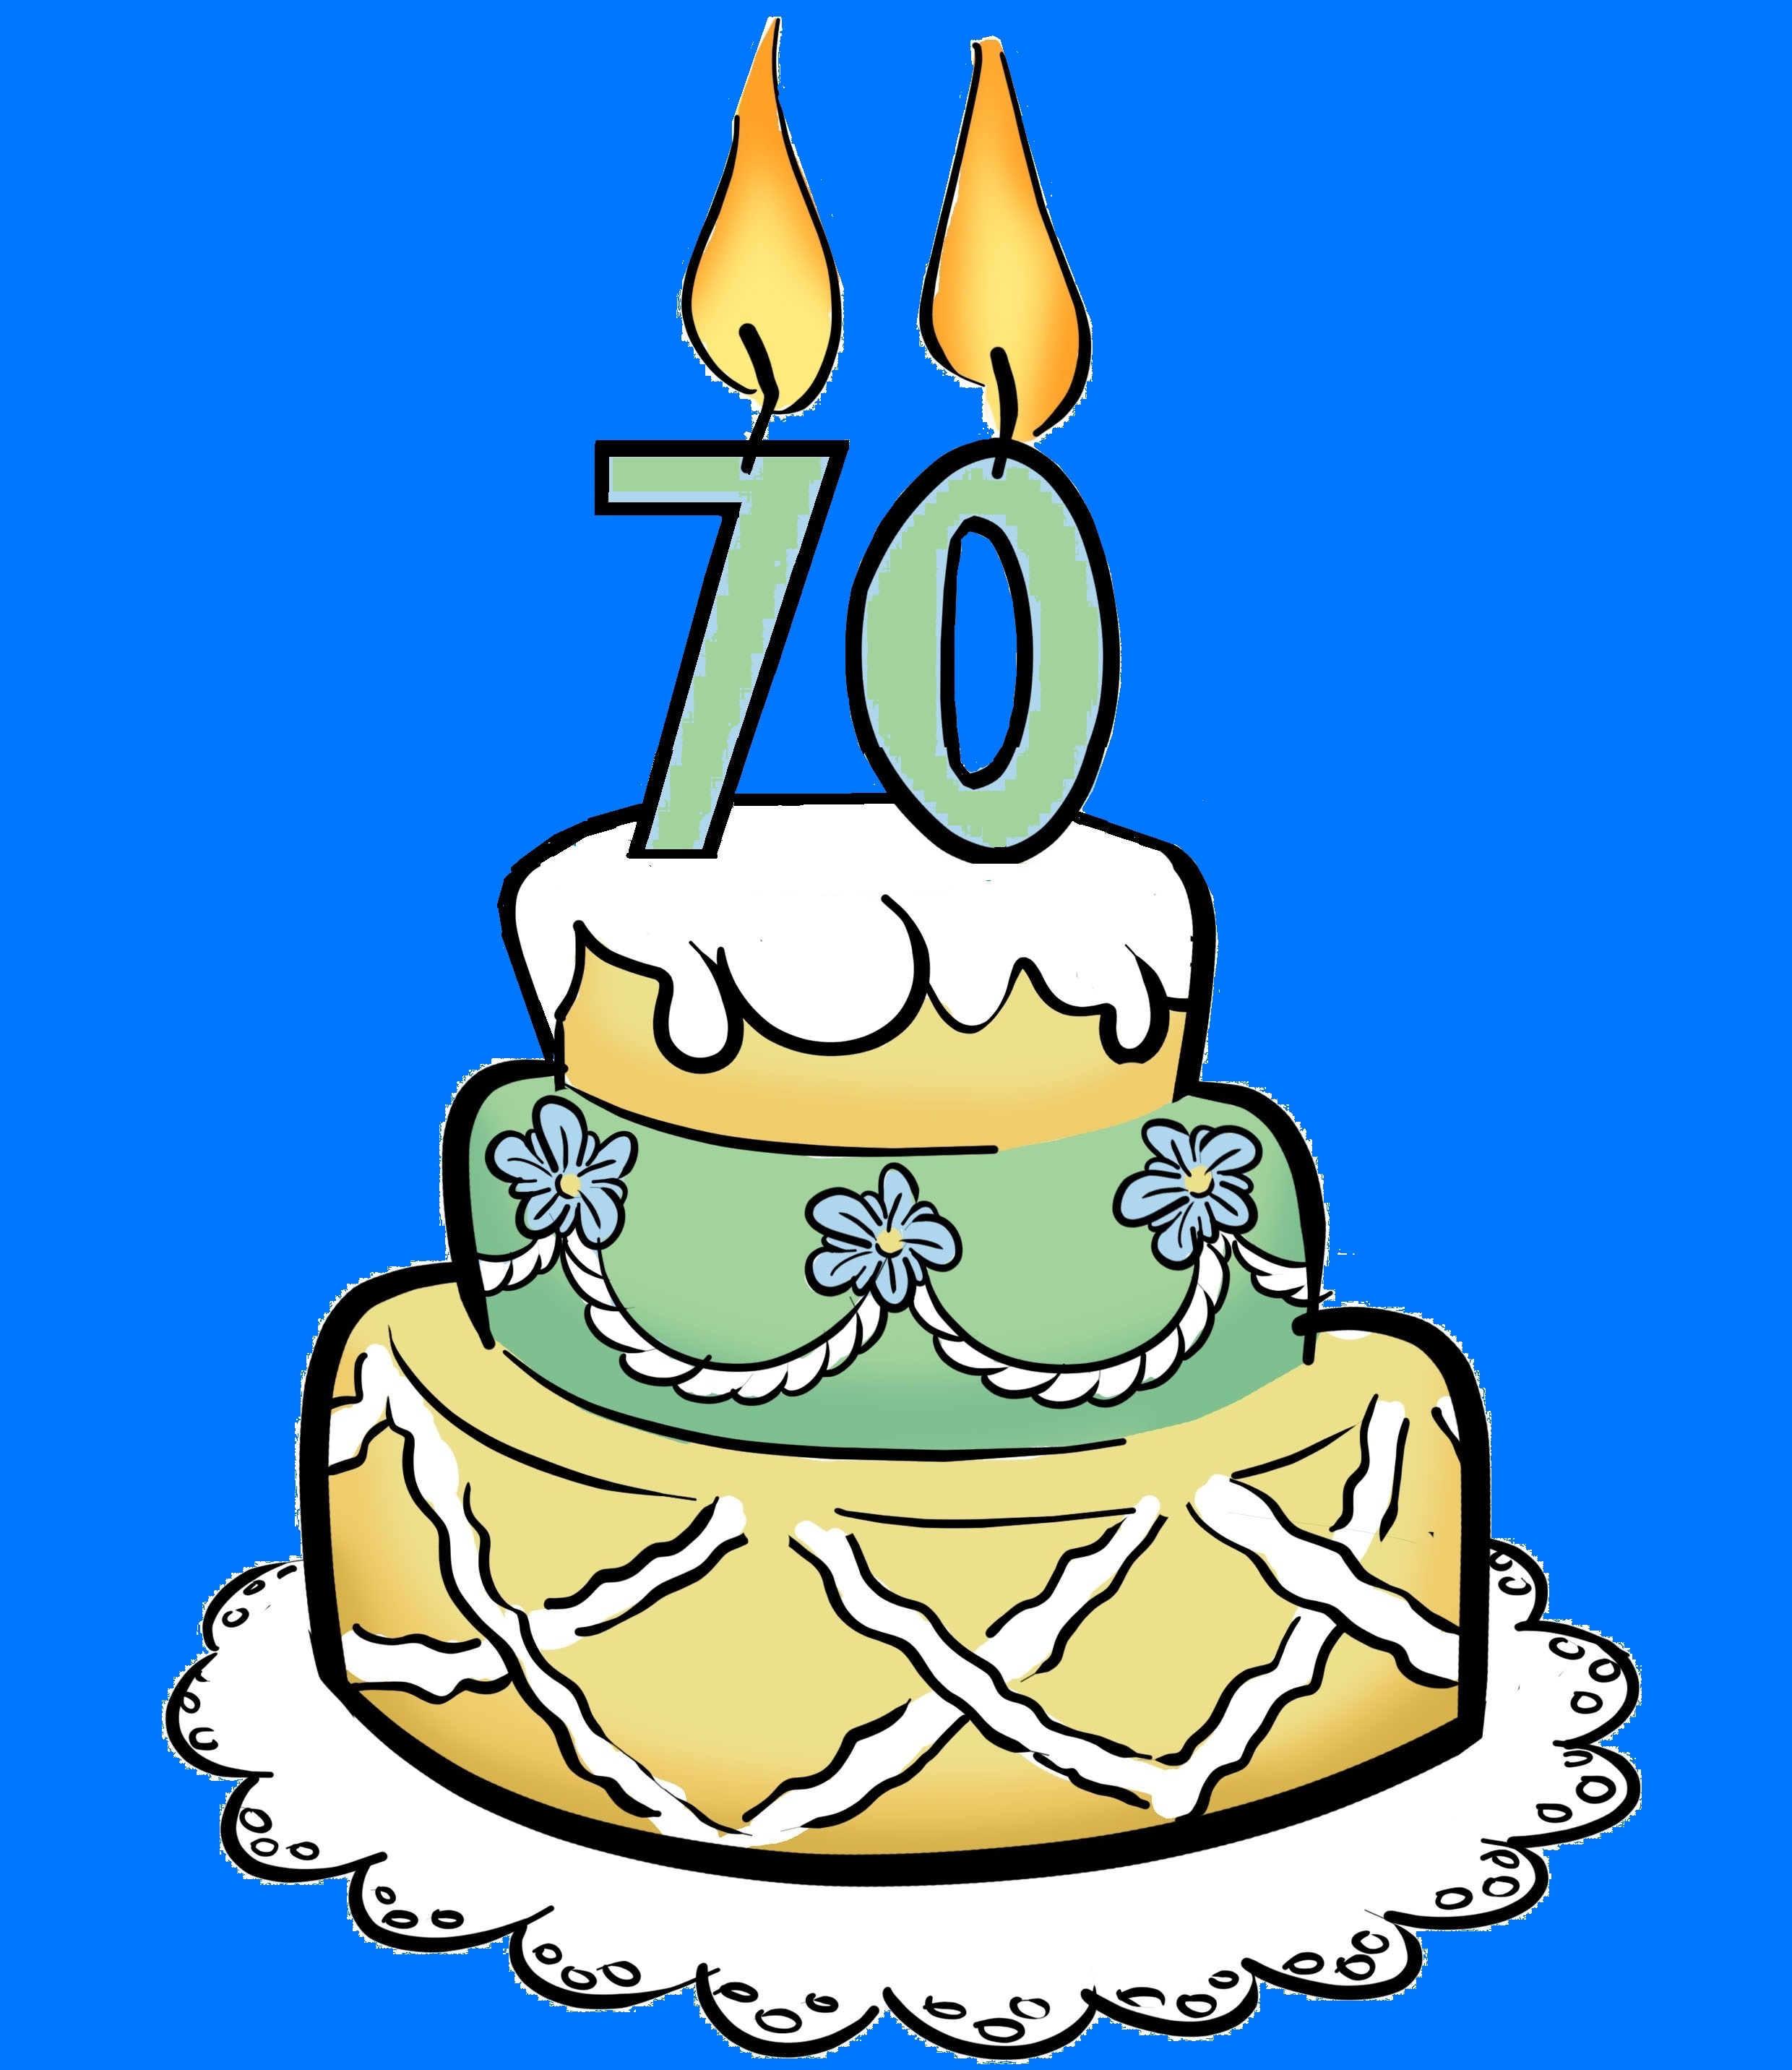 70 Year